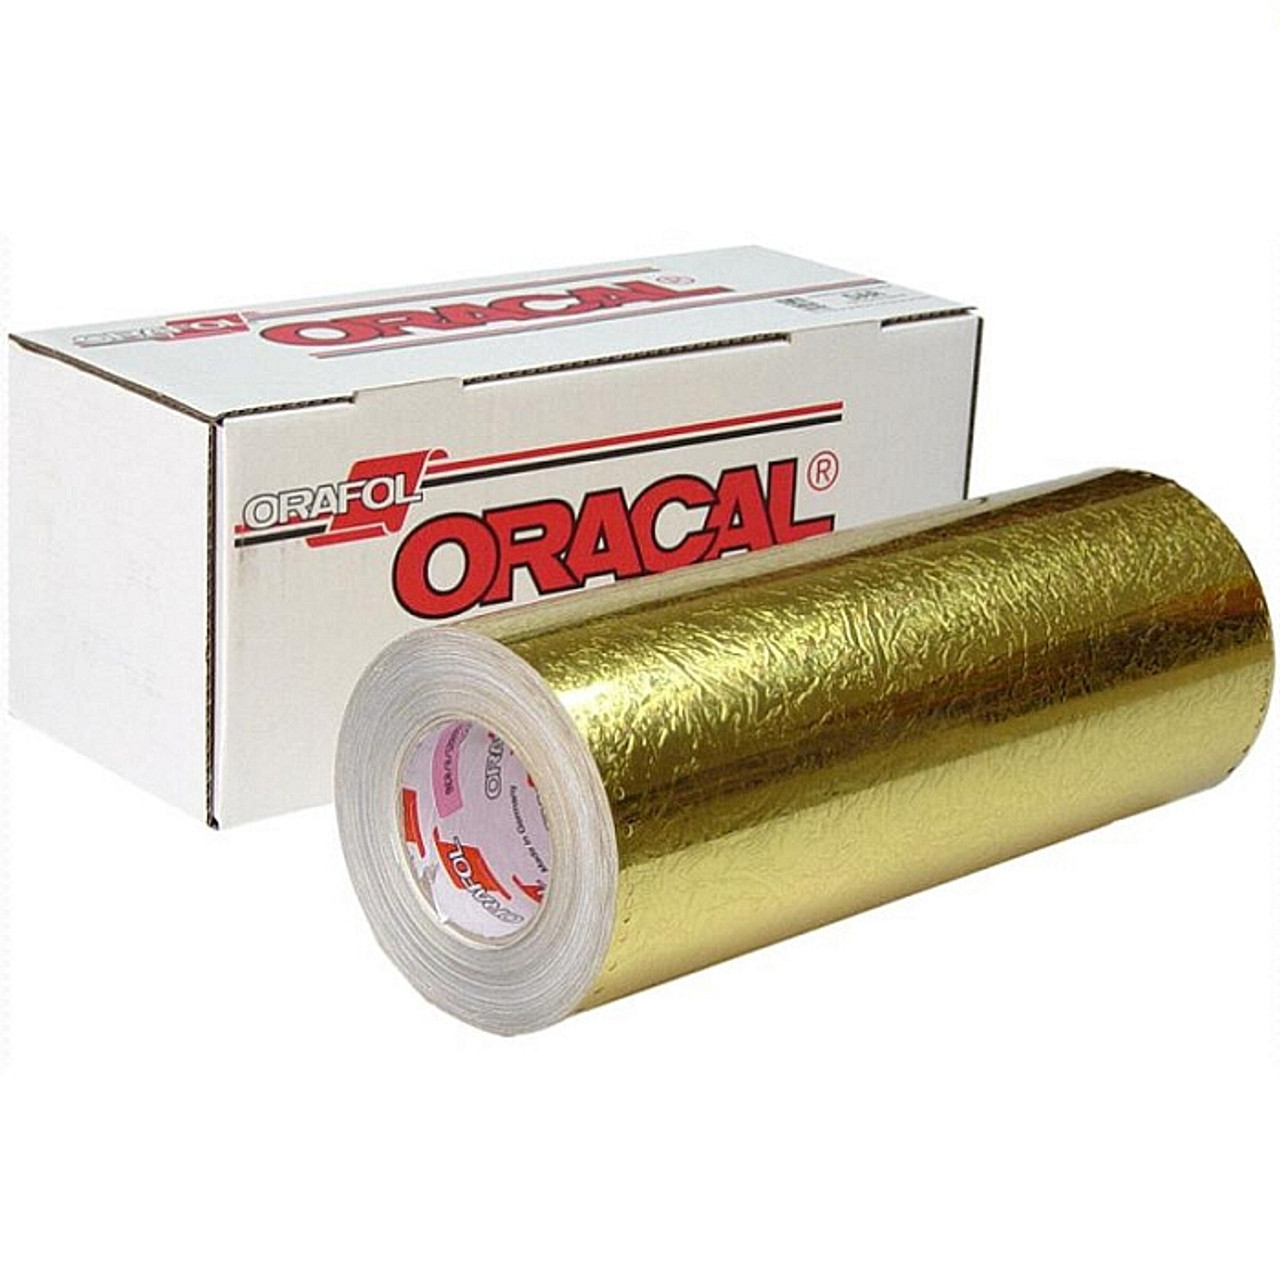 Oracal 352 - Gold Chrome - Permanent Vinyl - 12 x 5 Ft Rolls